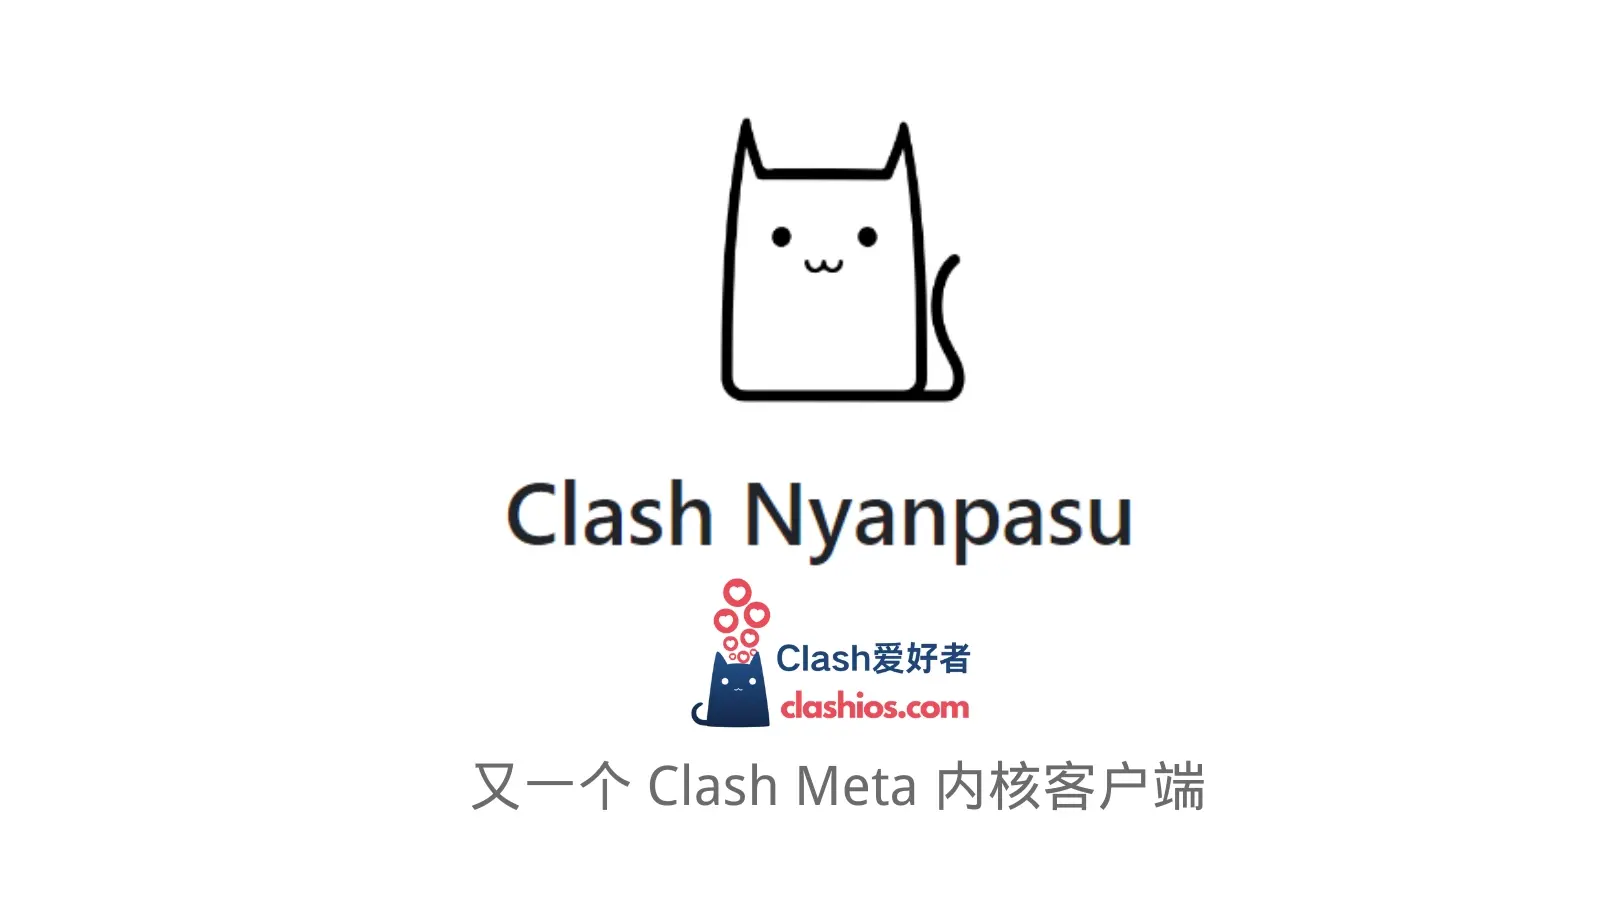 Clash Nyanpasu